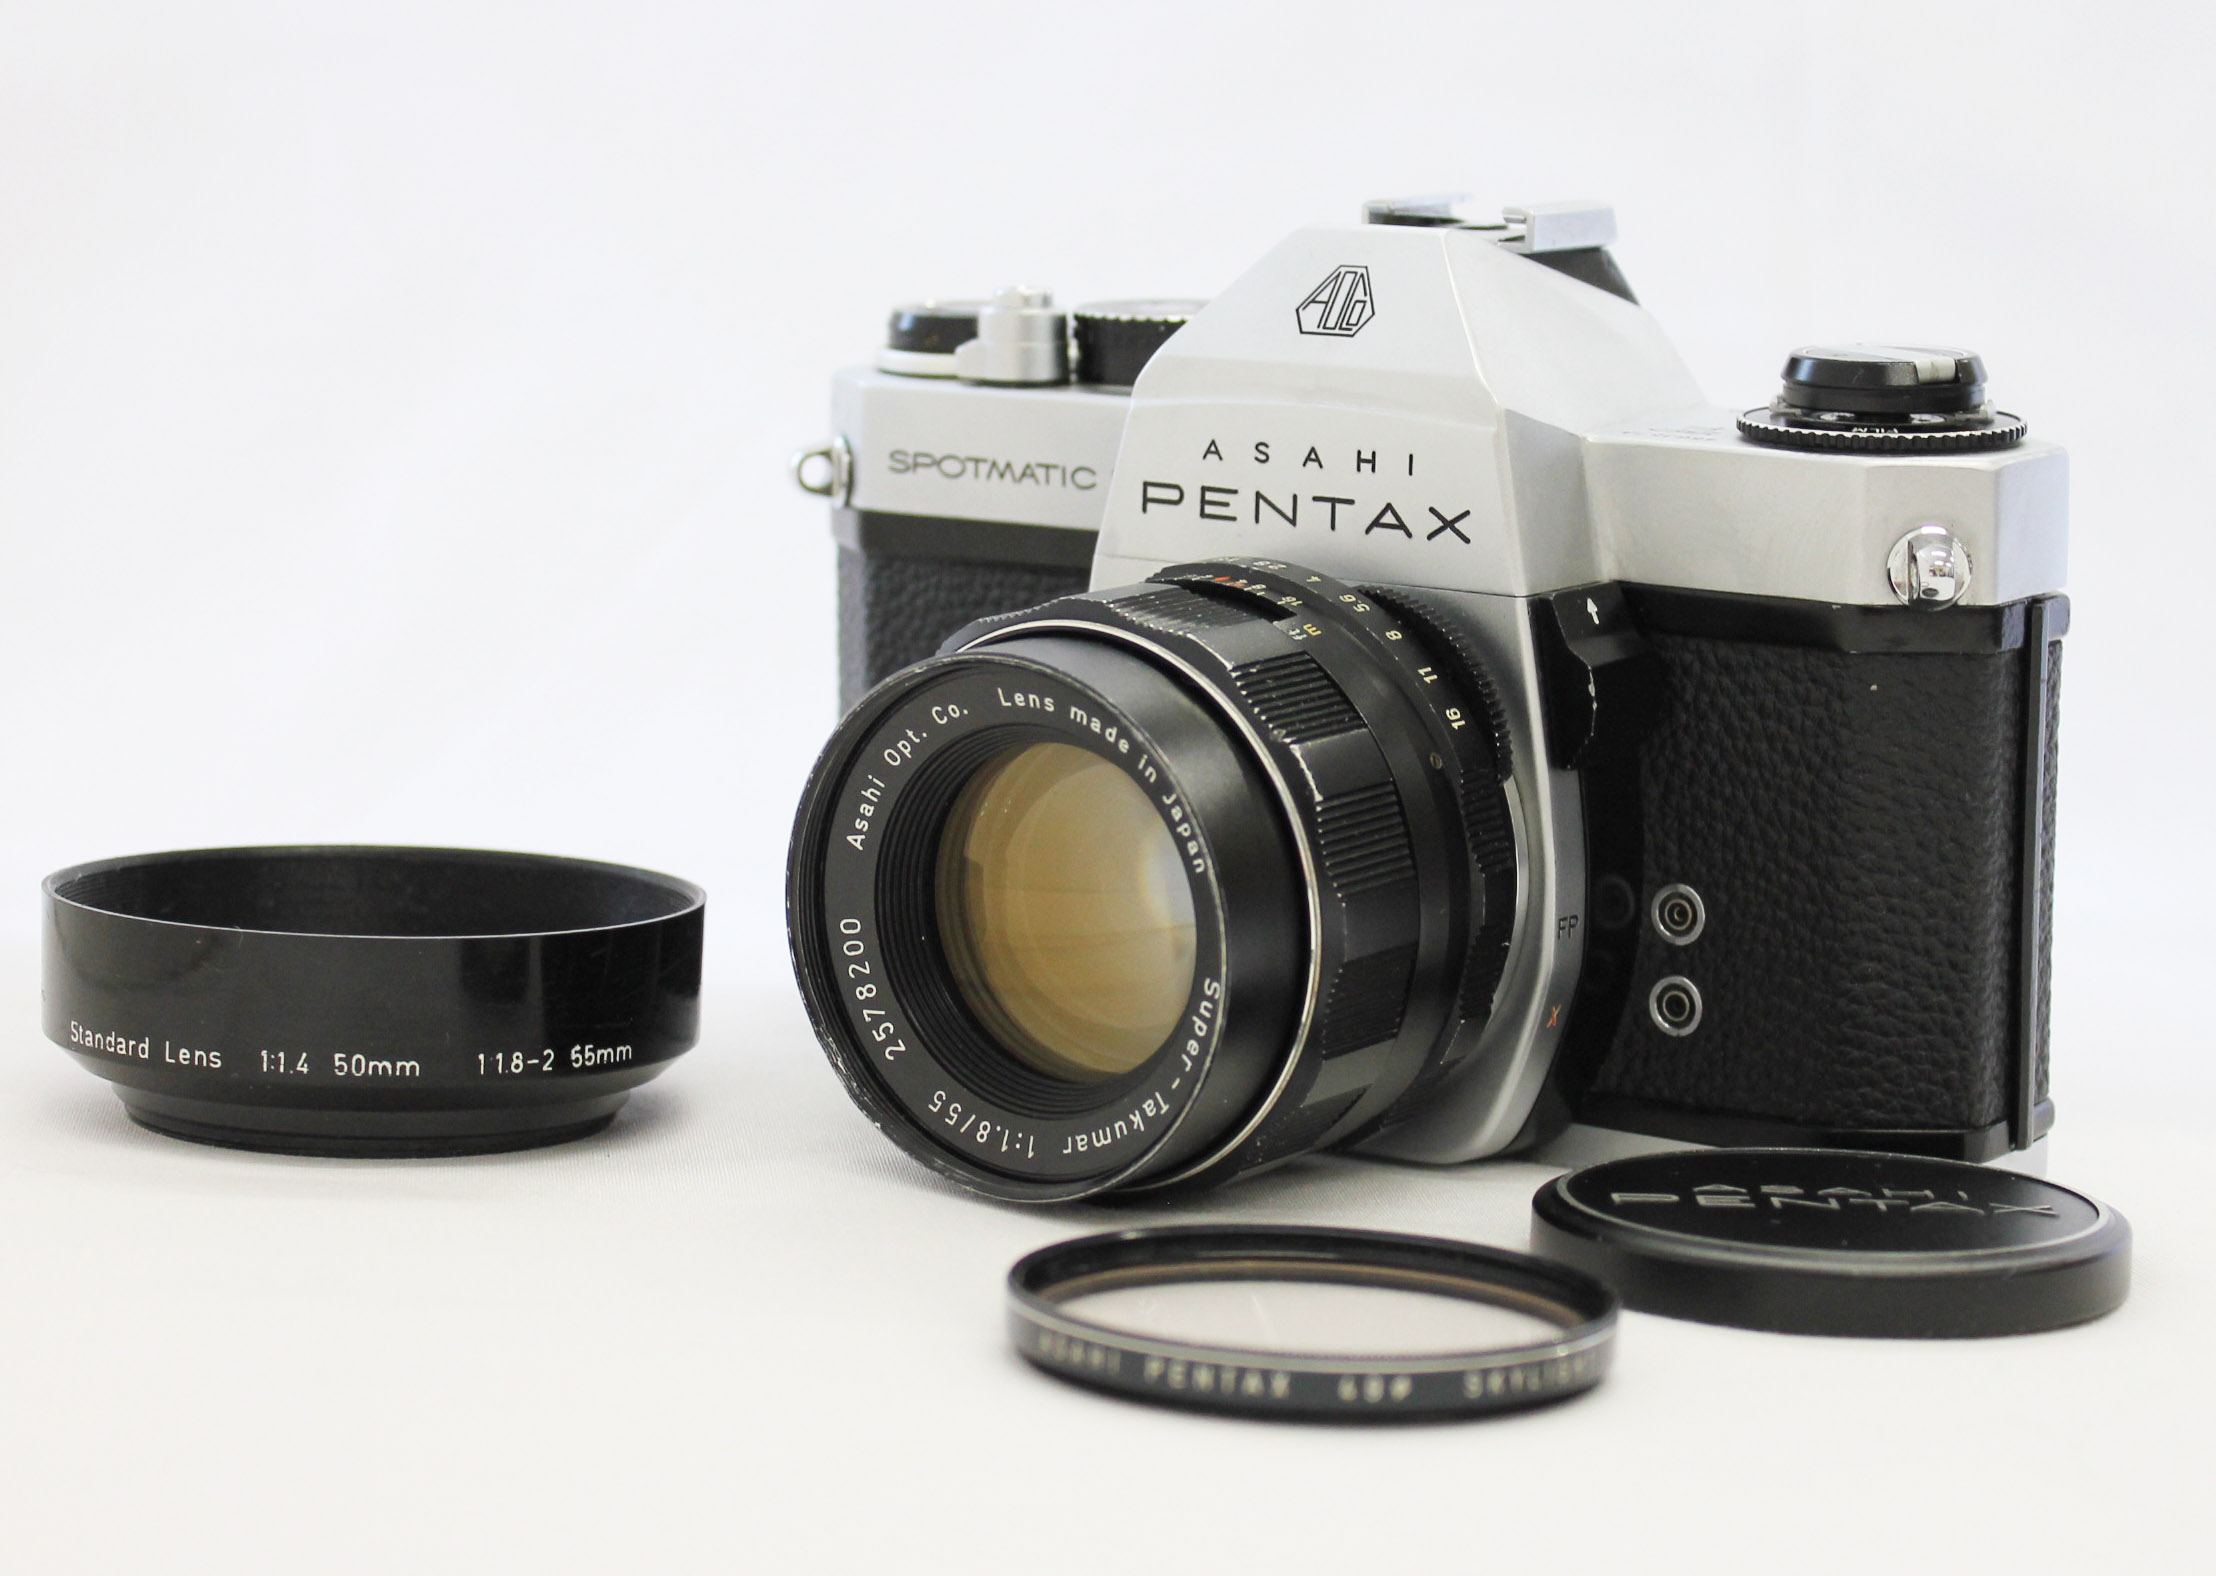 Japan Used Camera Shop | [Exc++++] Asahi Pentax Spotmatic F SPF Camera w/ Super Takumar 55mm F/1.8 and Lens Hood from Japan